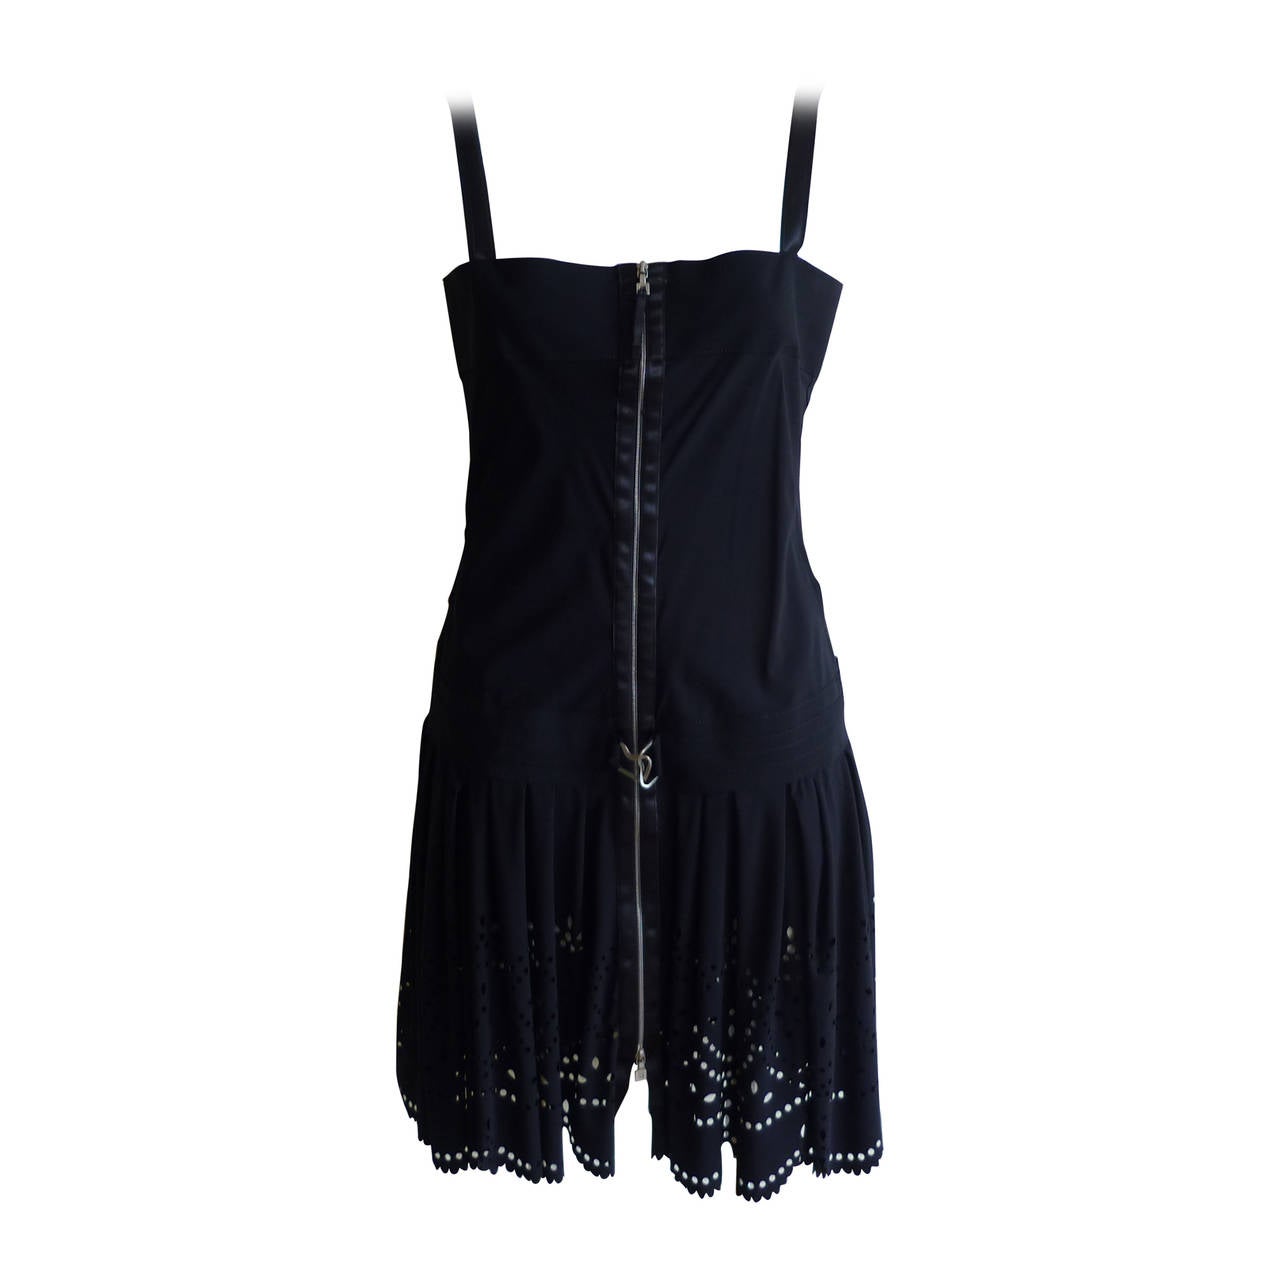 Marithe Francois Girbaud Black Dress (42 FR) For Sale